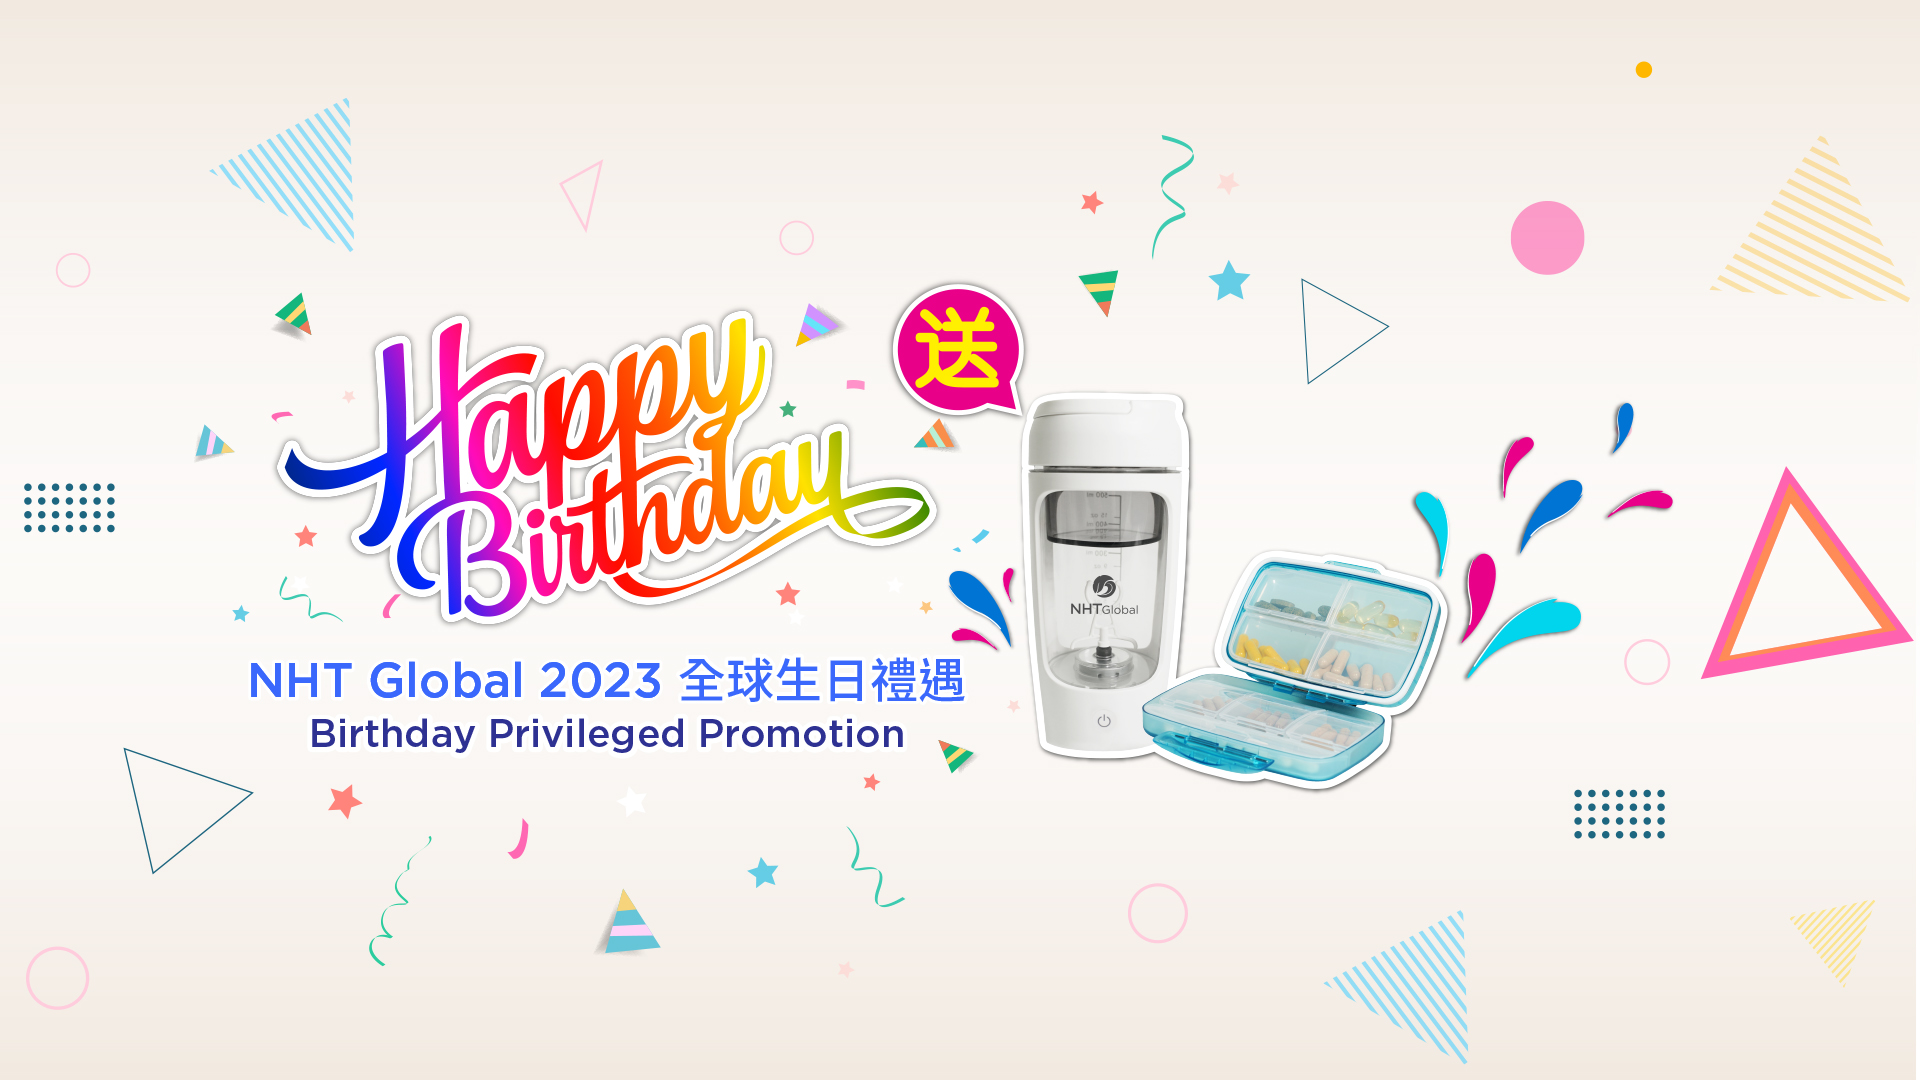 HK_Birthday_Jan_2023_Slider_1920x1080